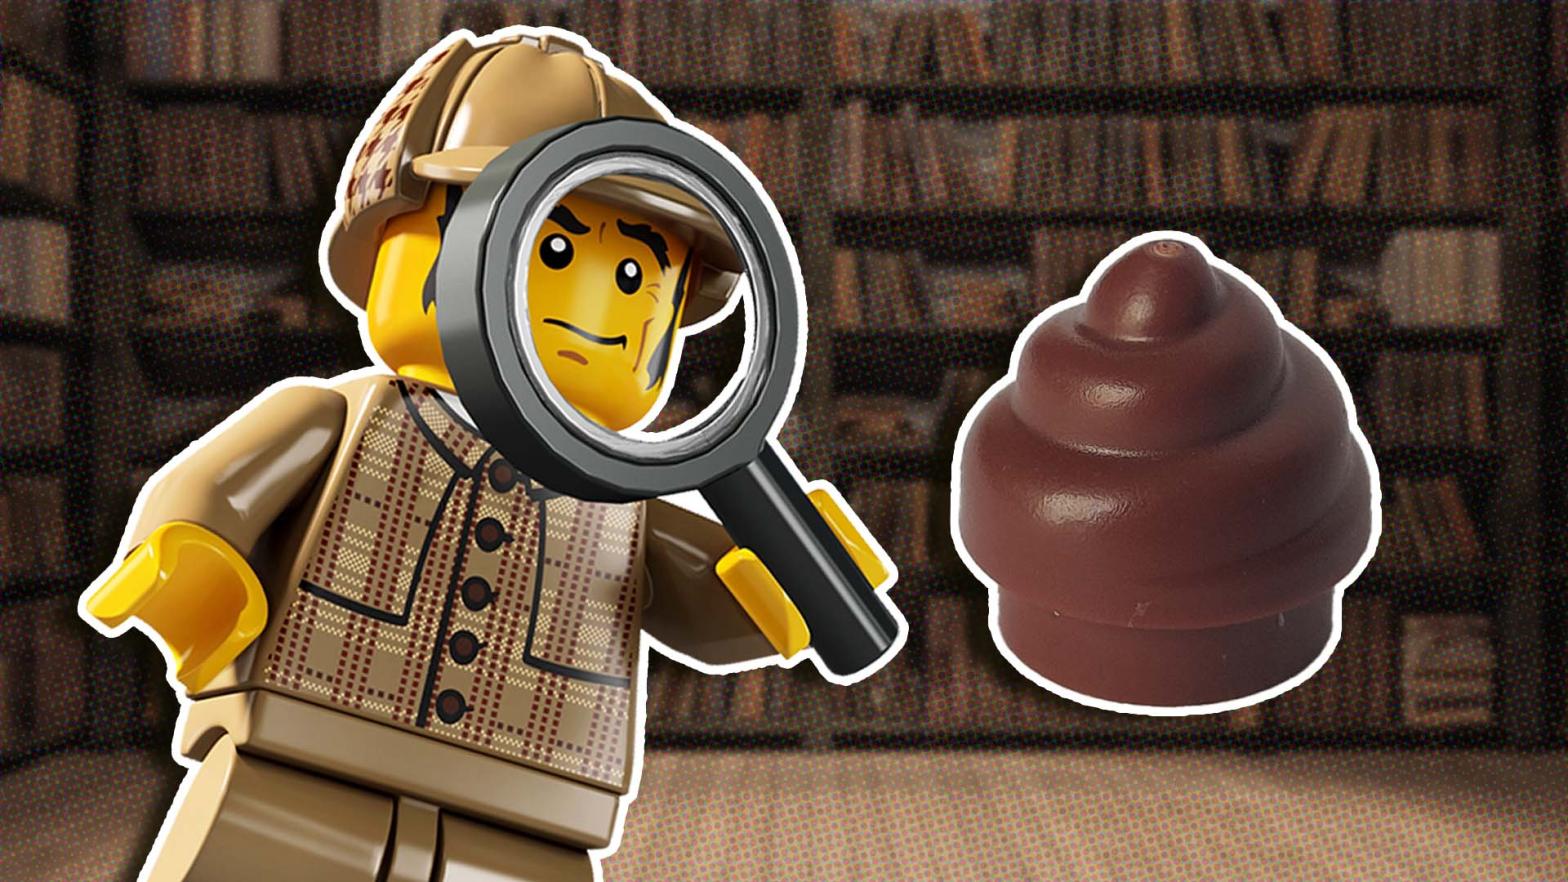 Image: Lego / Rebrickable / Kotaku / Branko Devic, Shutterstock